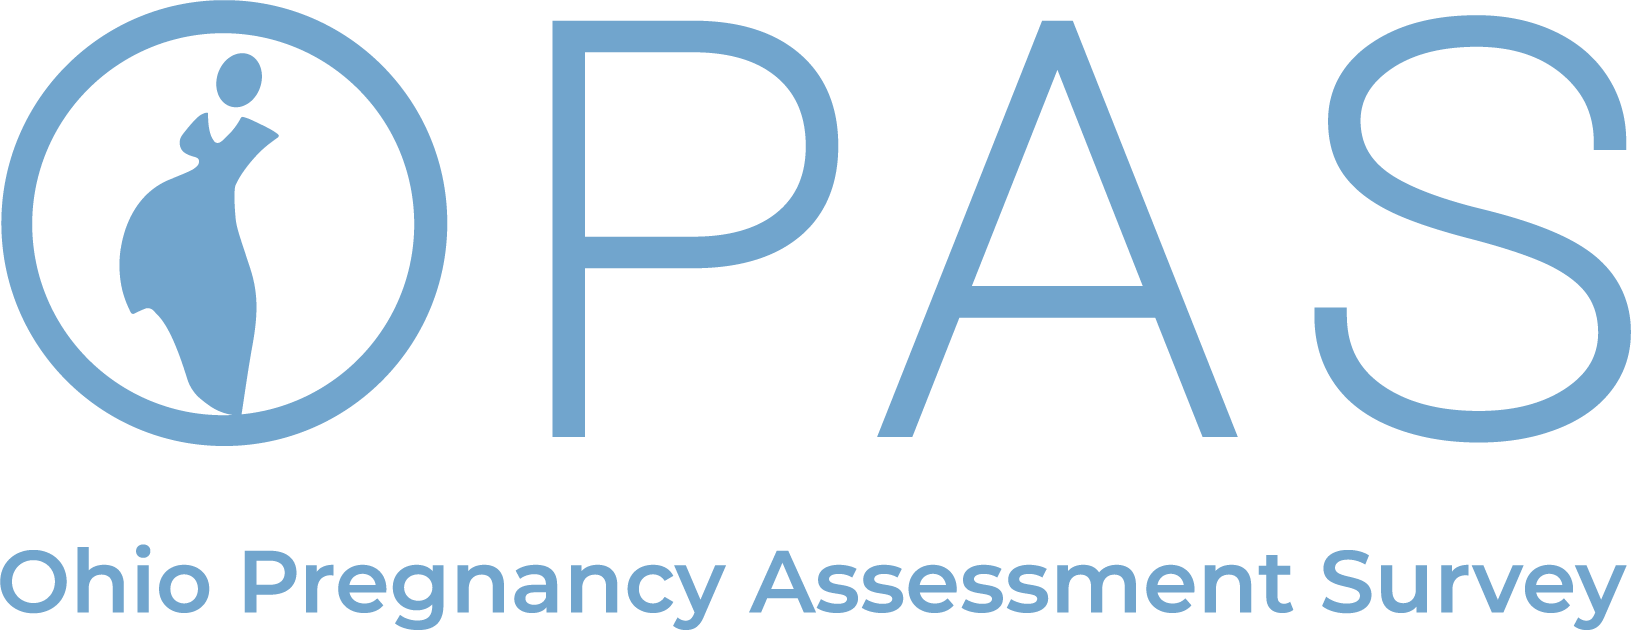 Ohio Pregnancy Assessment Survey logo